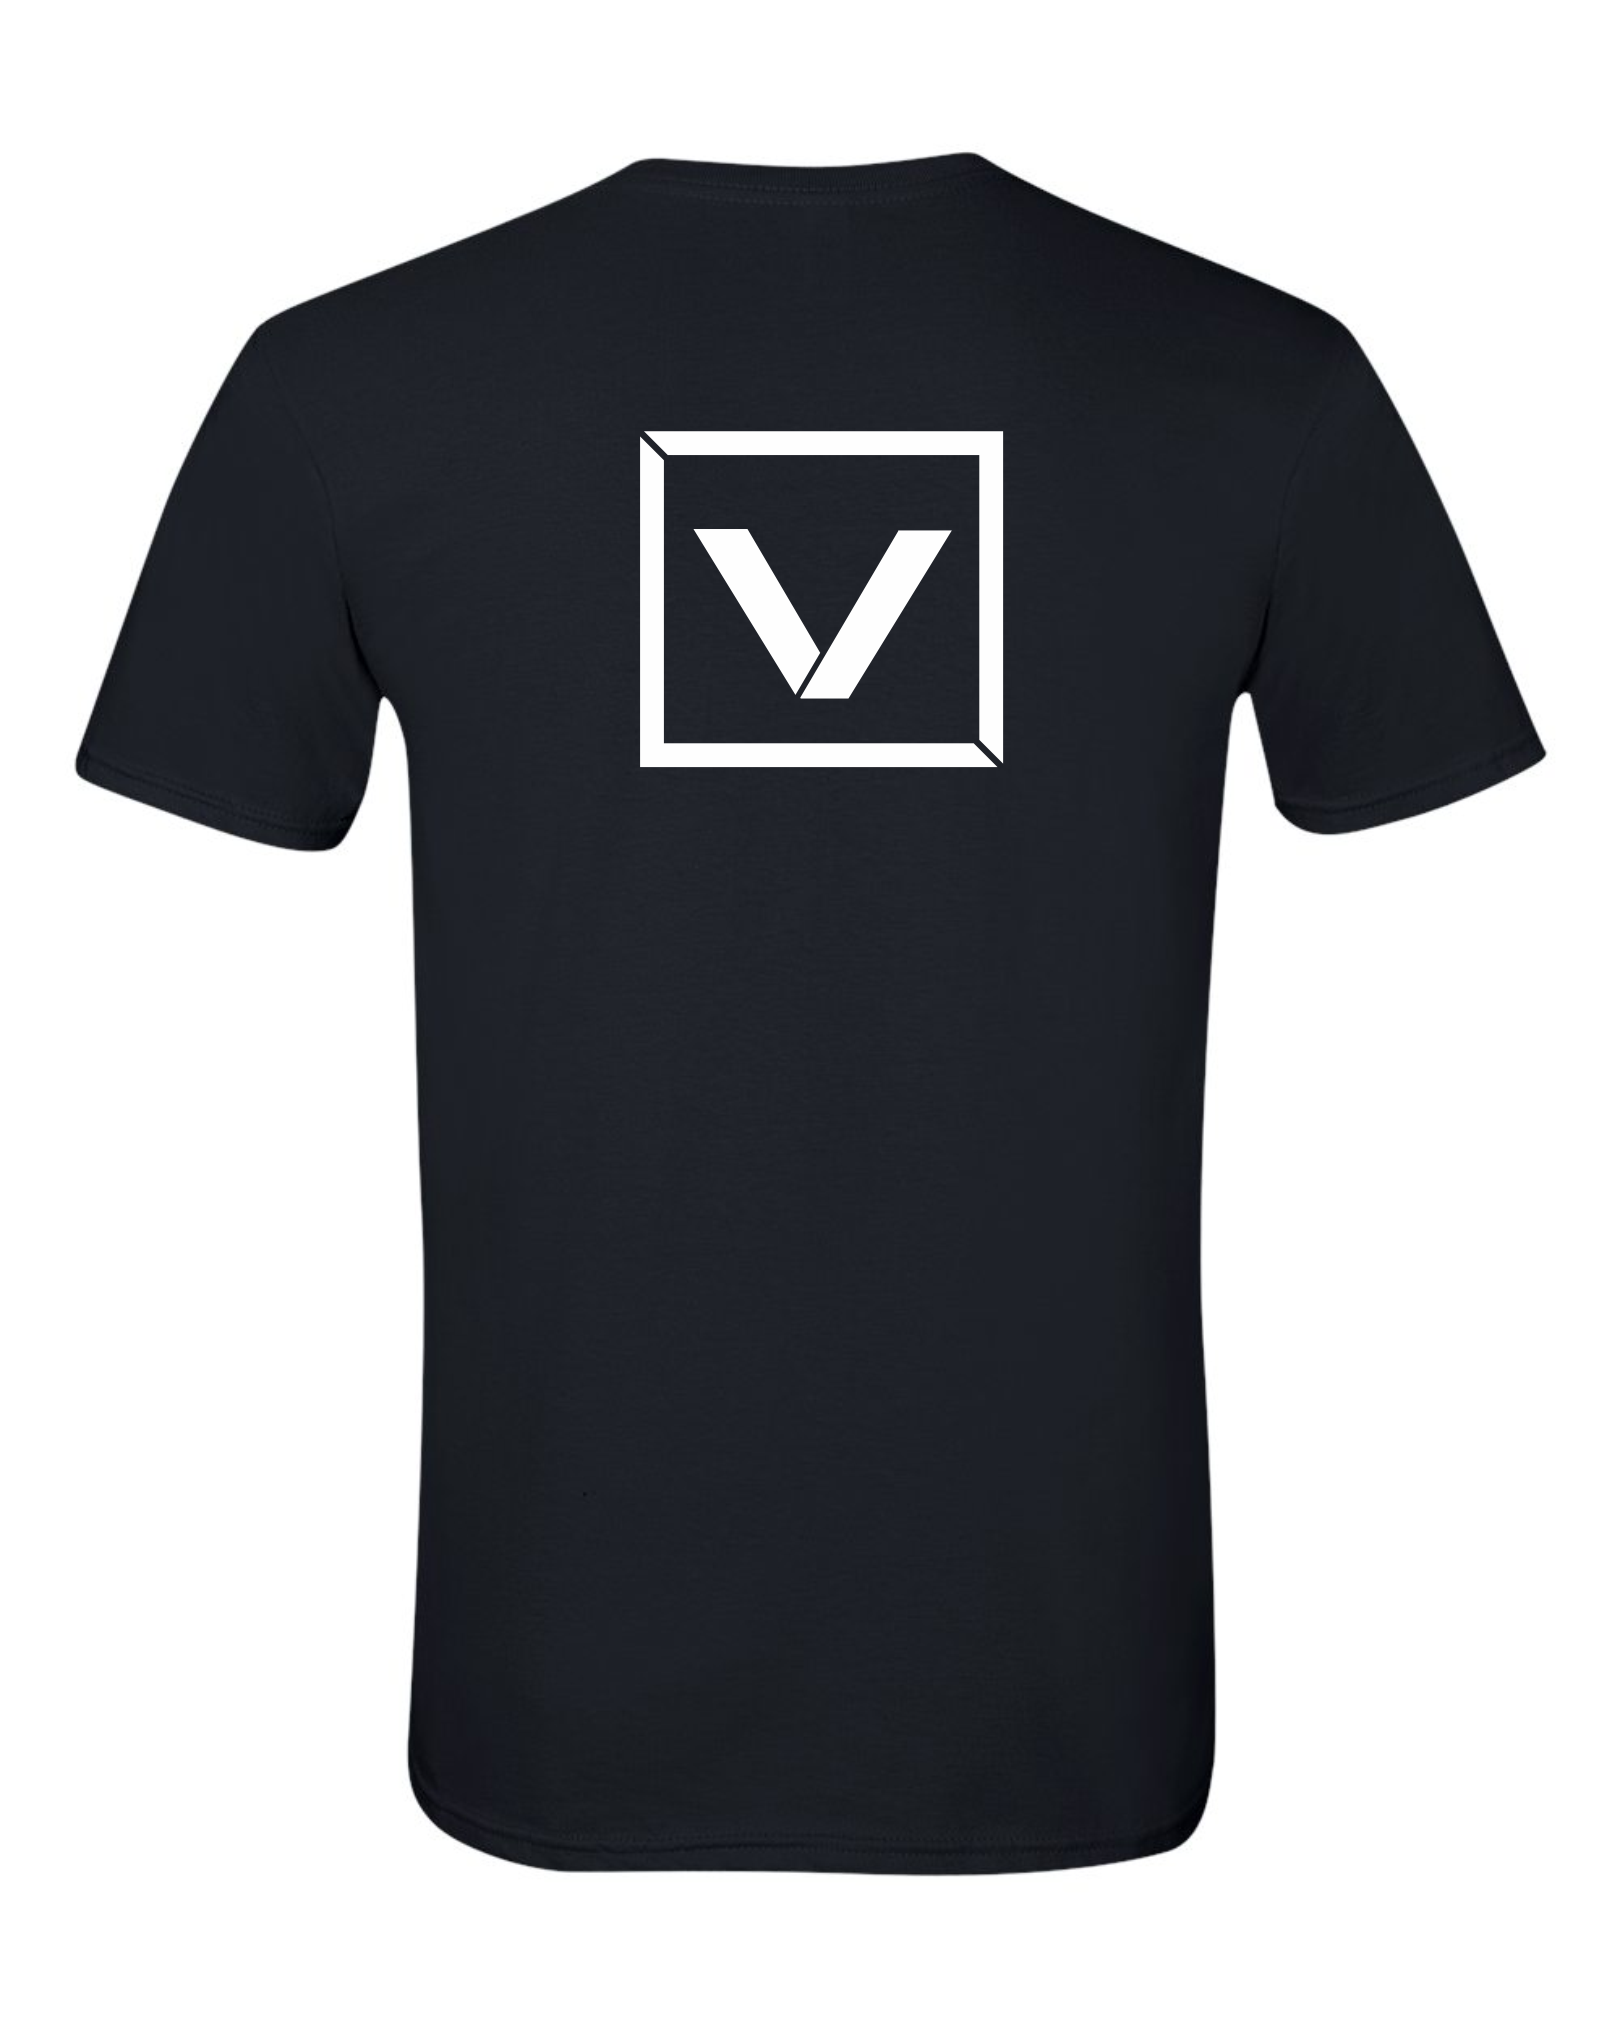 VITA - Unisex Softstyle Cotton T-Shirt